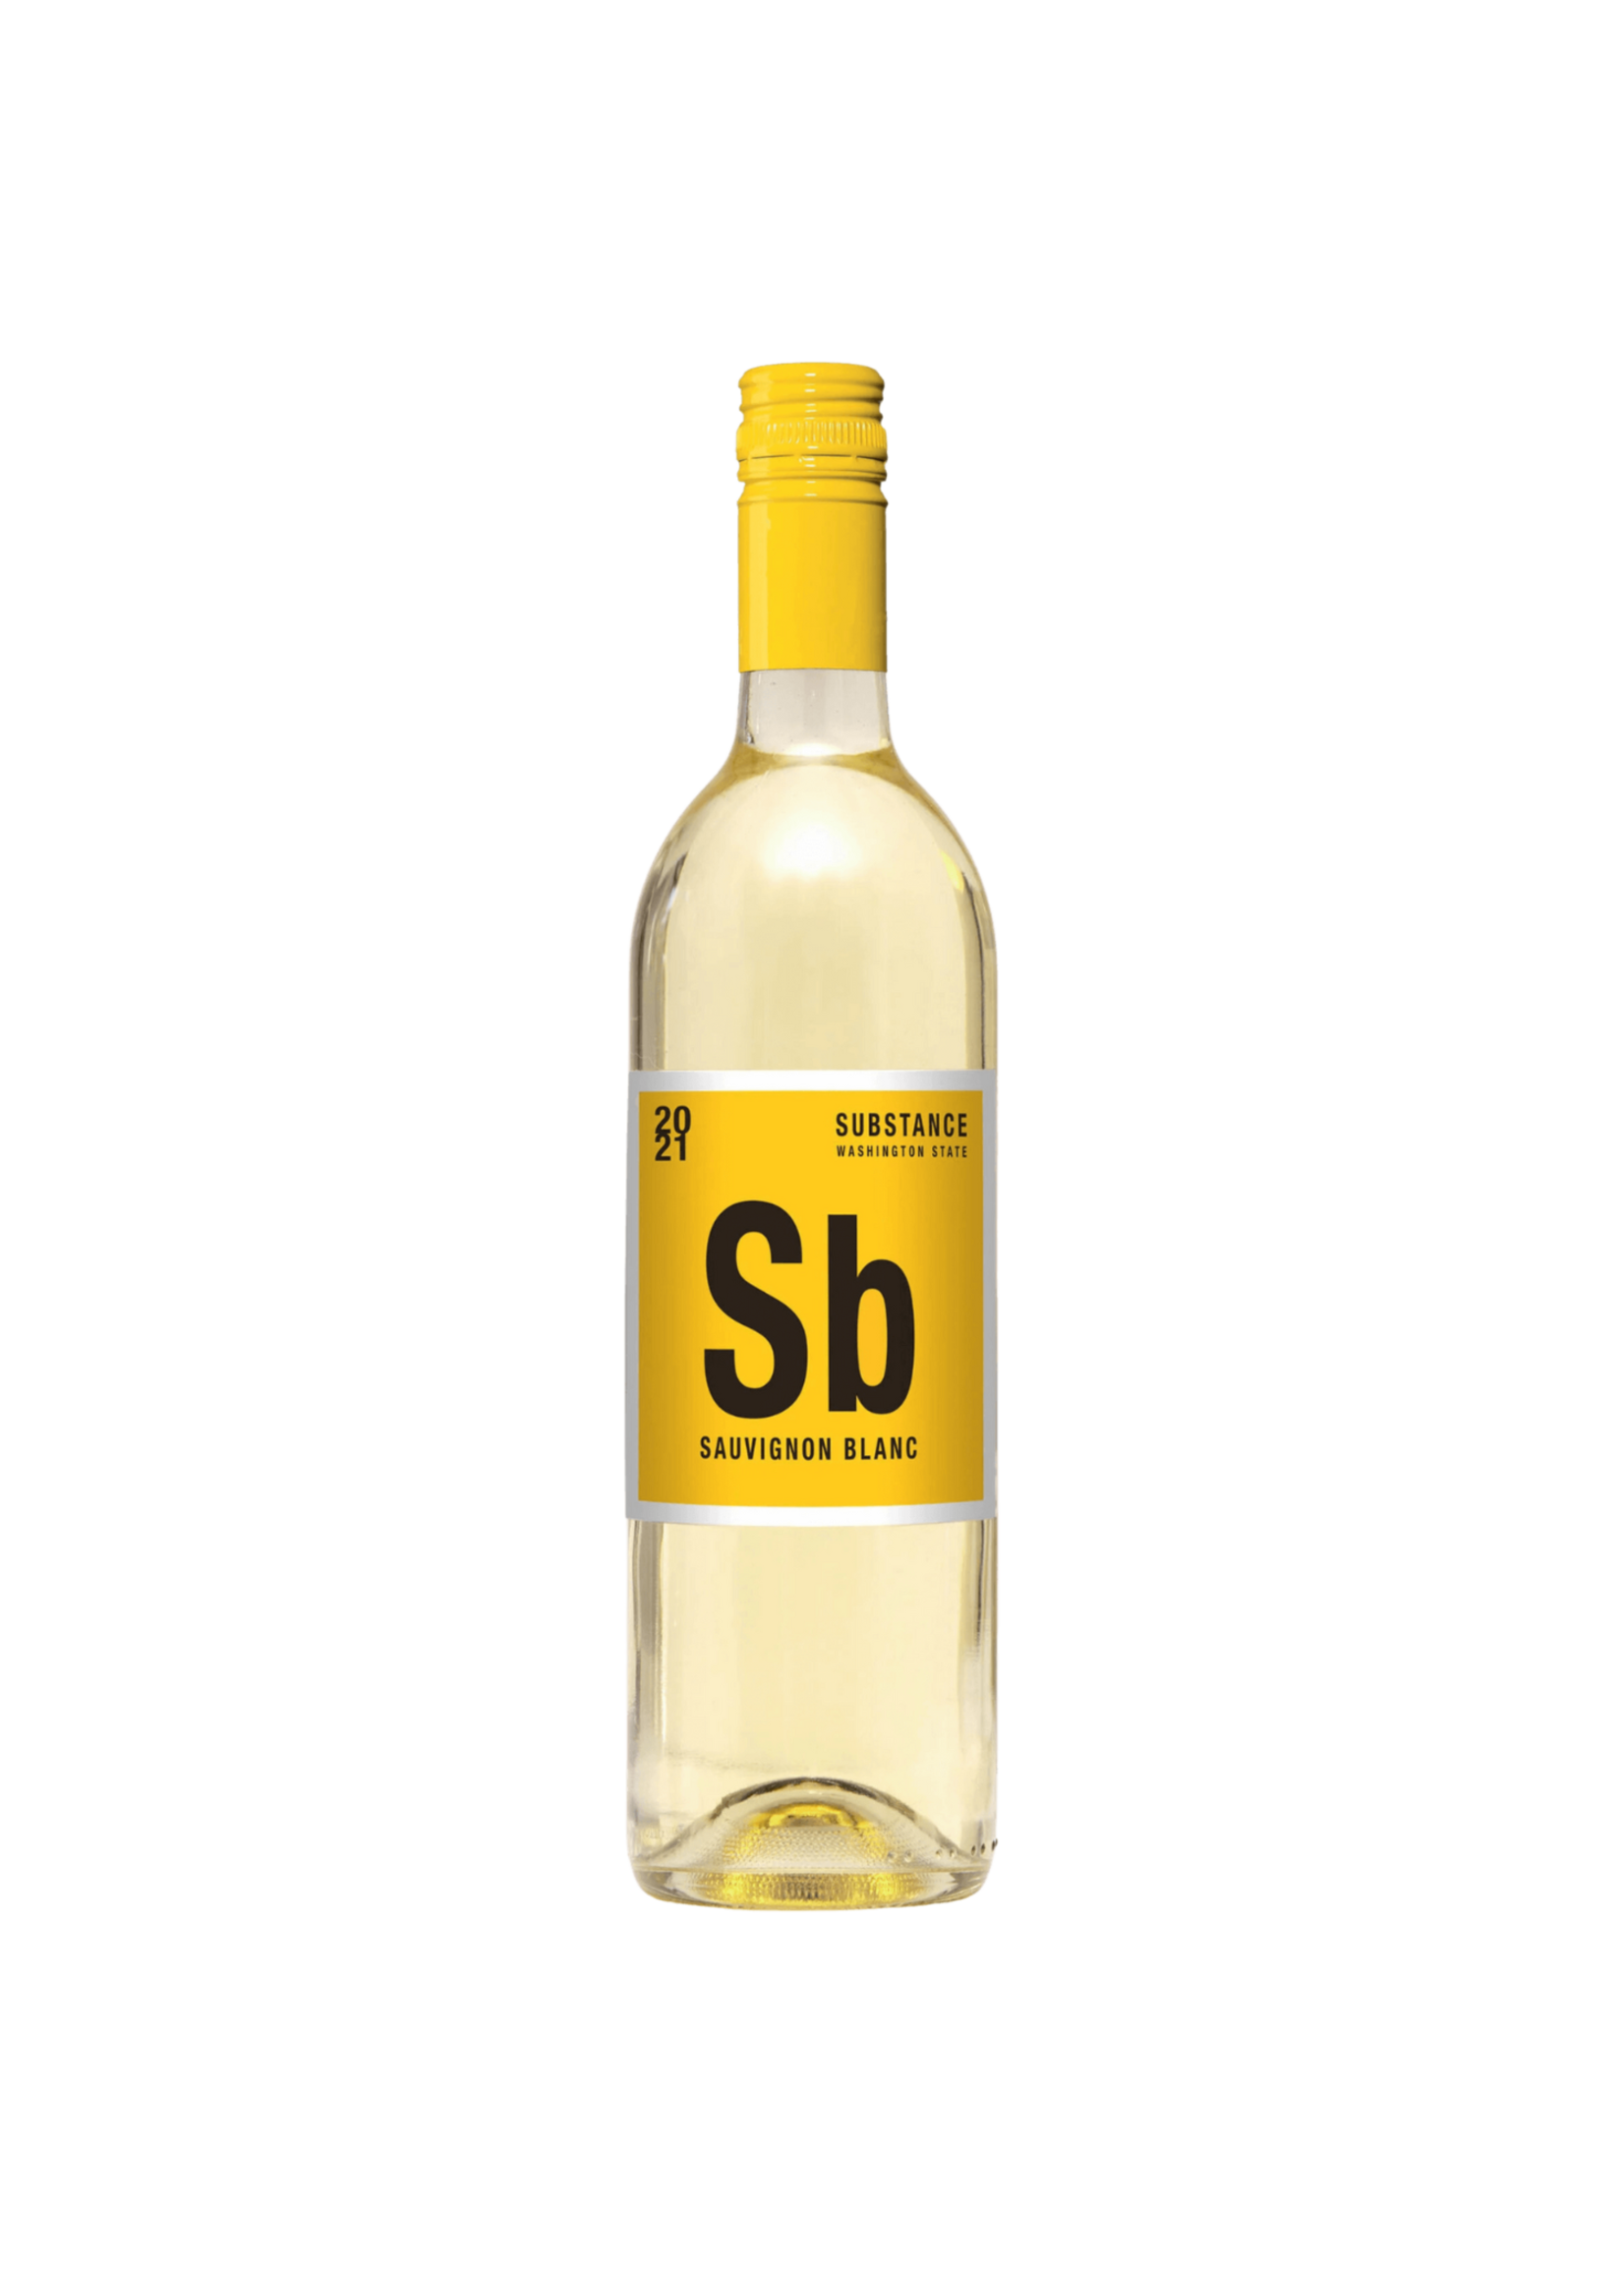 House of Smith Wines Substance Sauvignon Blanc